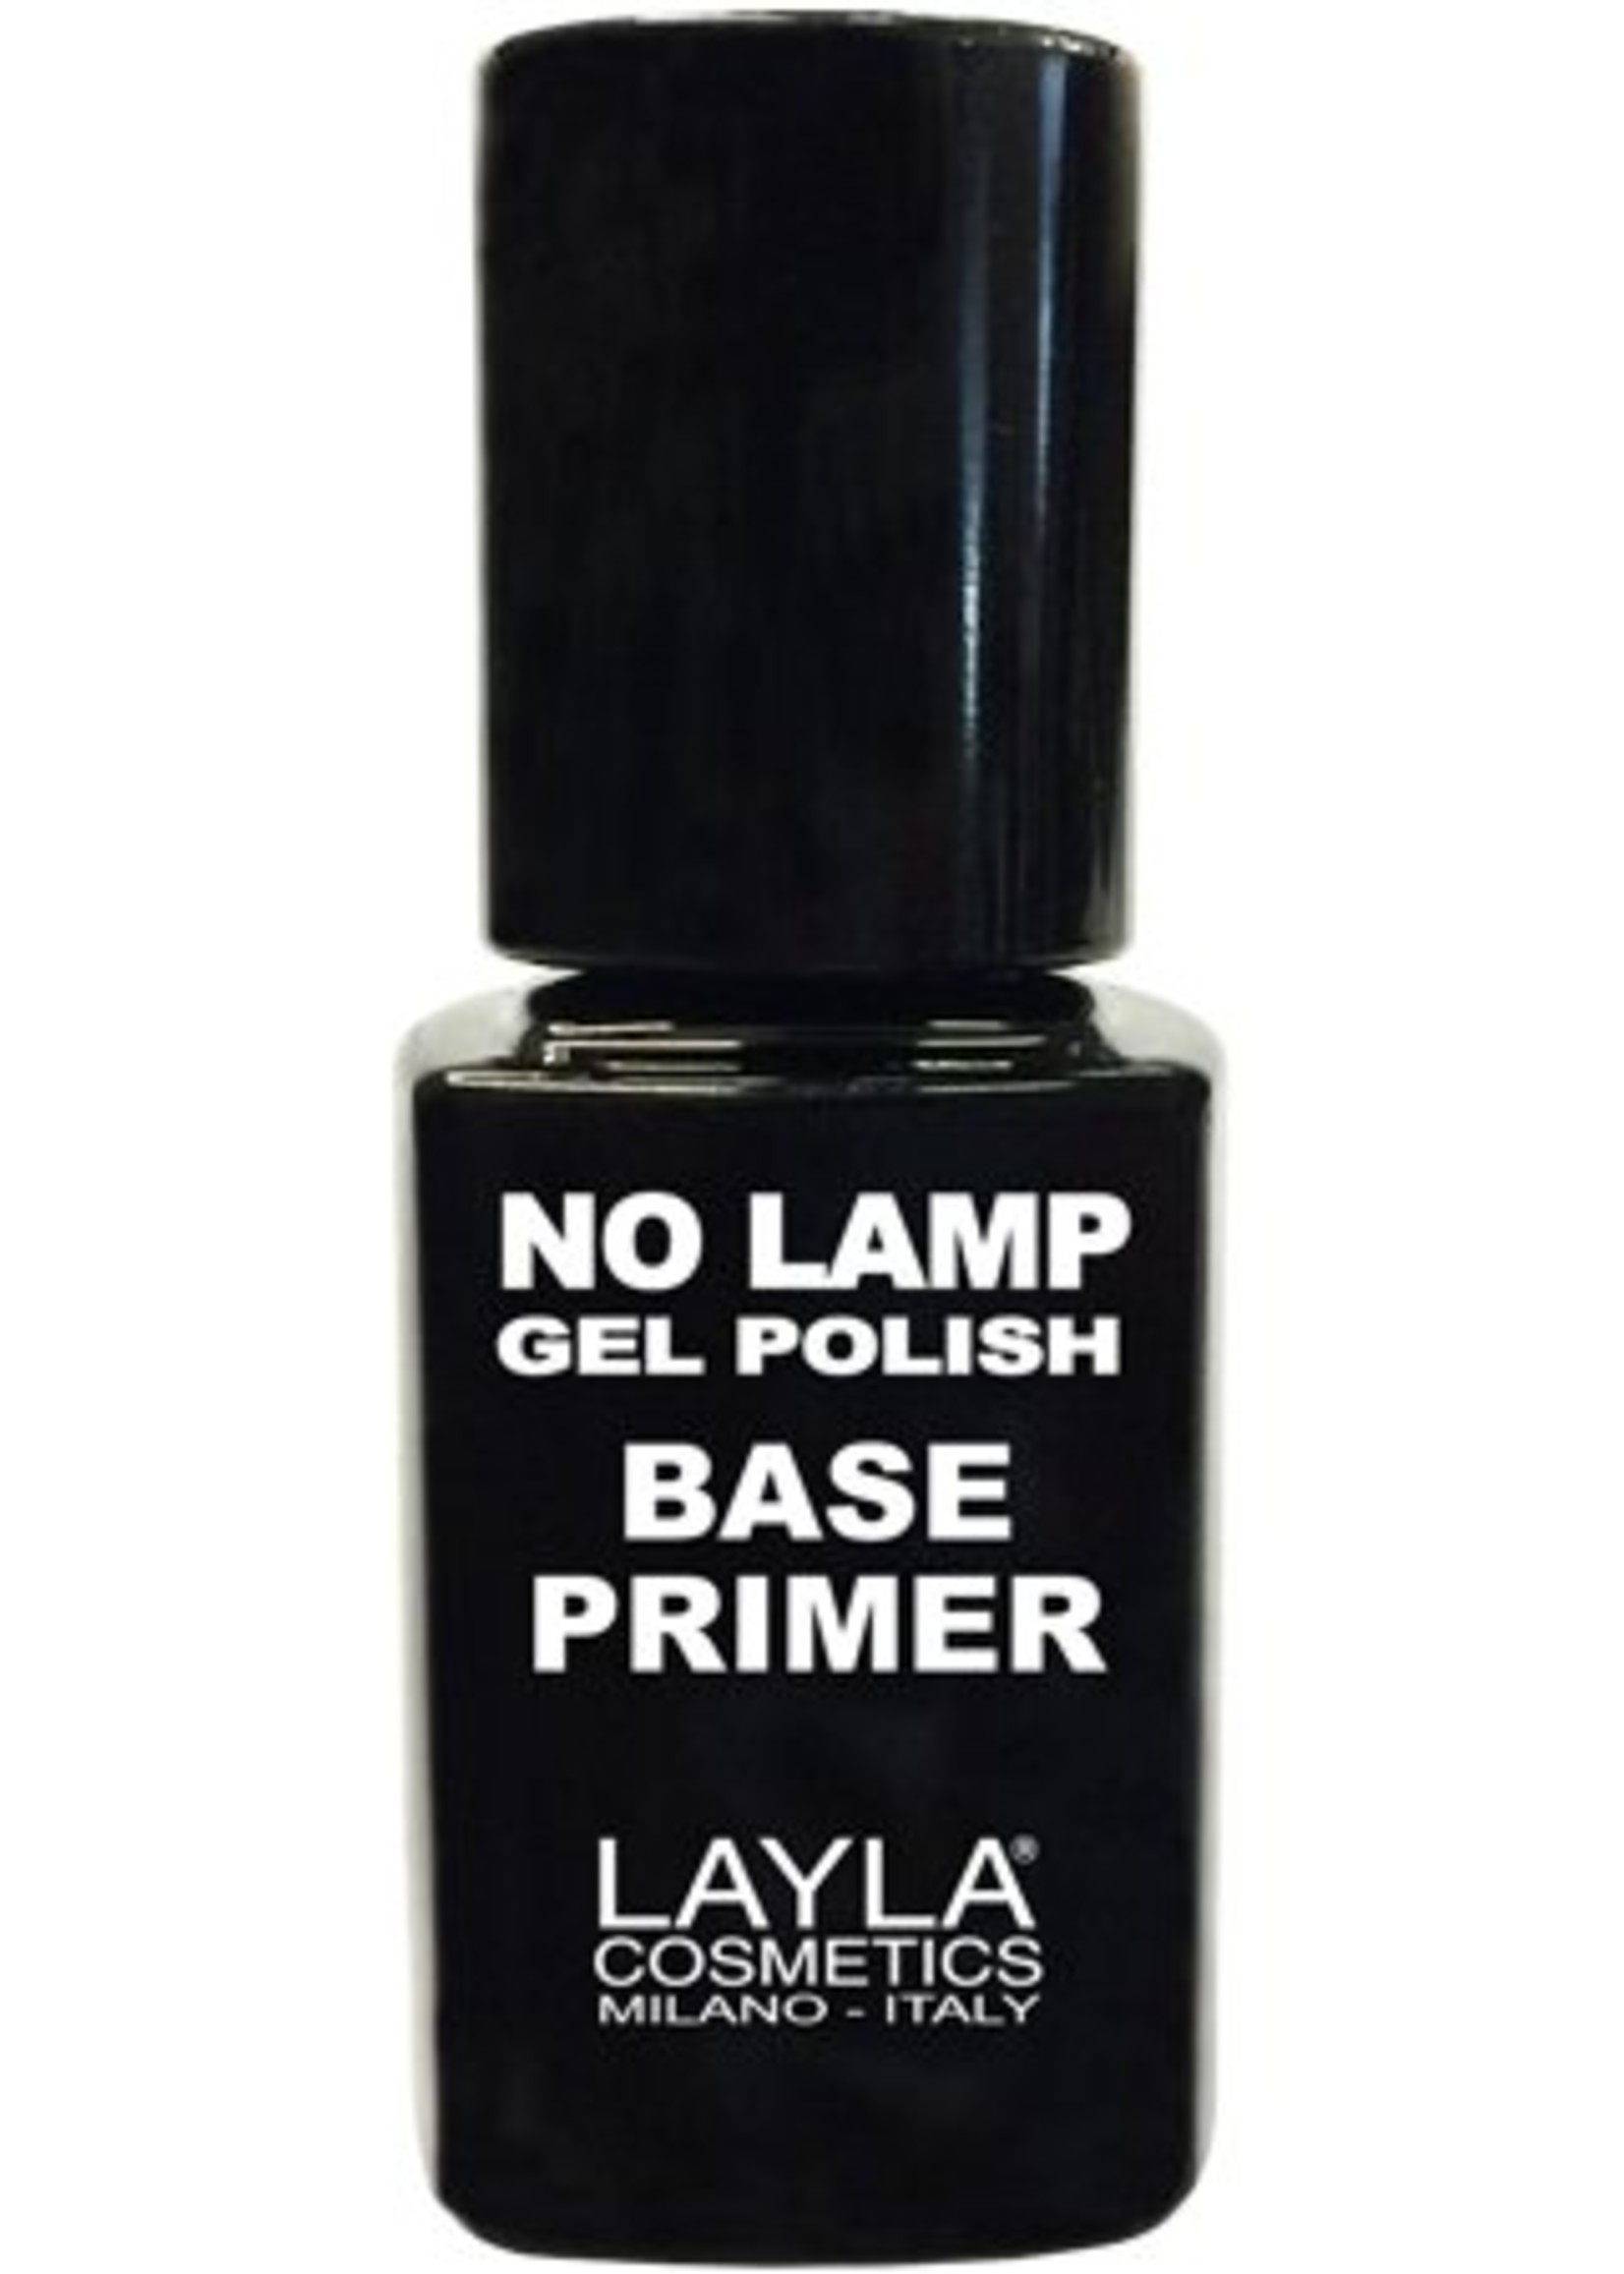 Base Primer - No Lamp Gel Polish Layla Cosmetics